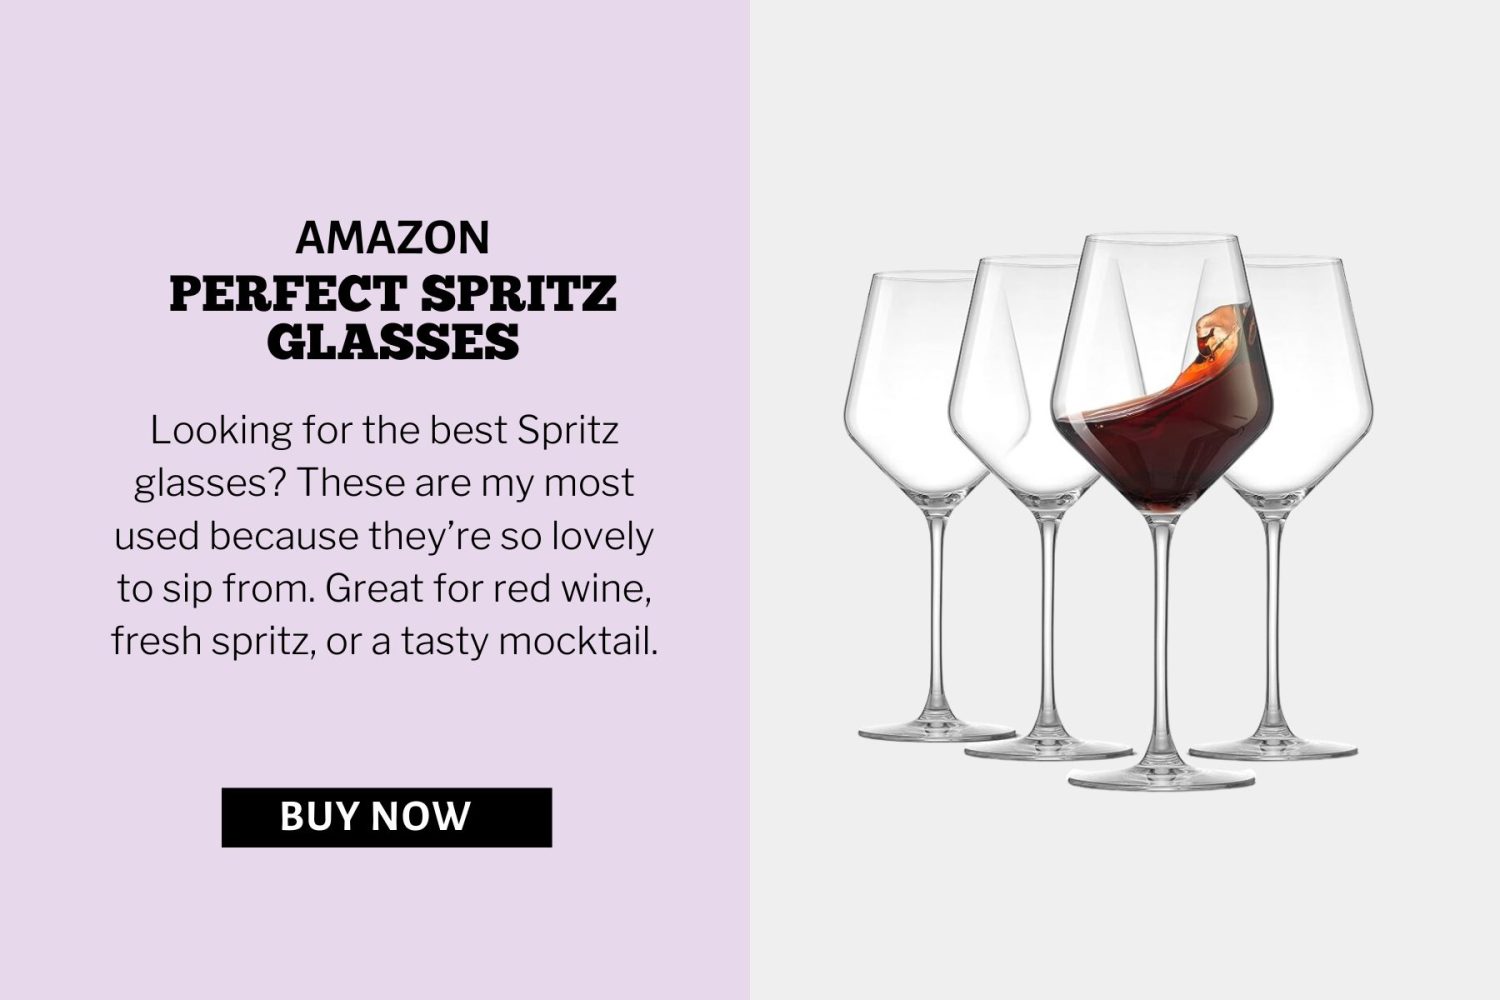 wine glasses product image.